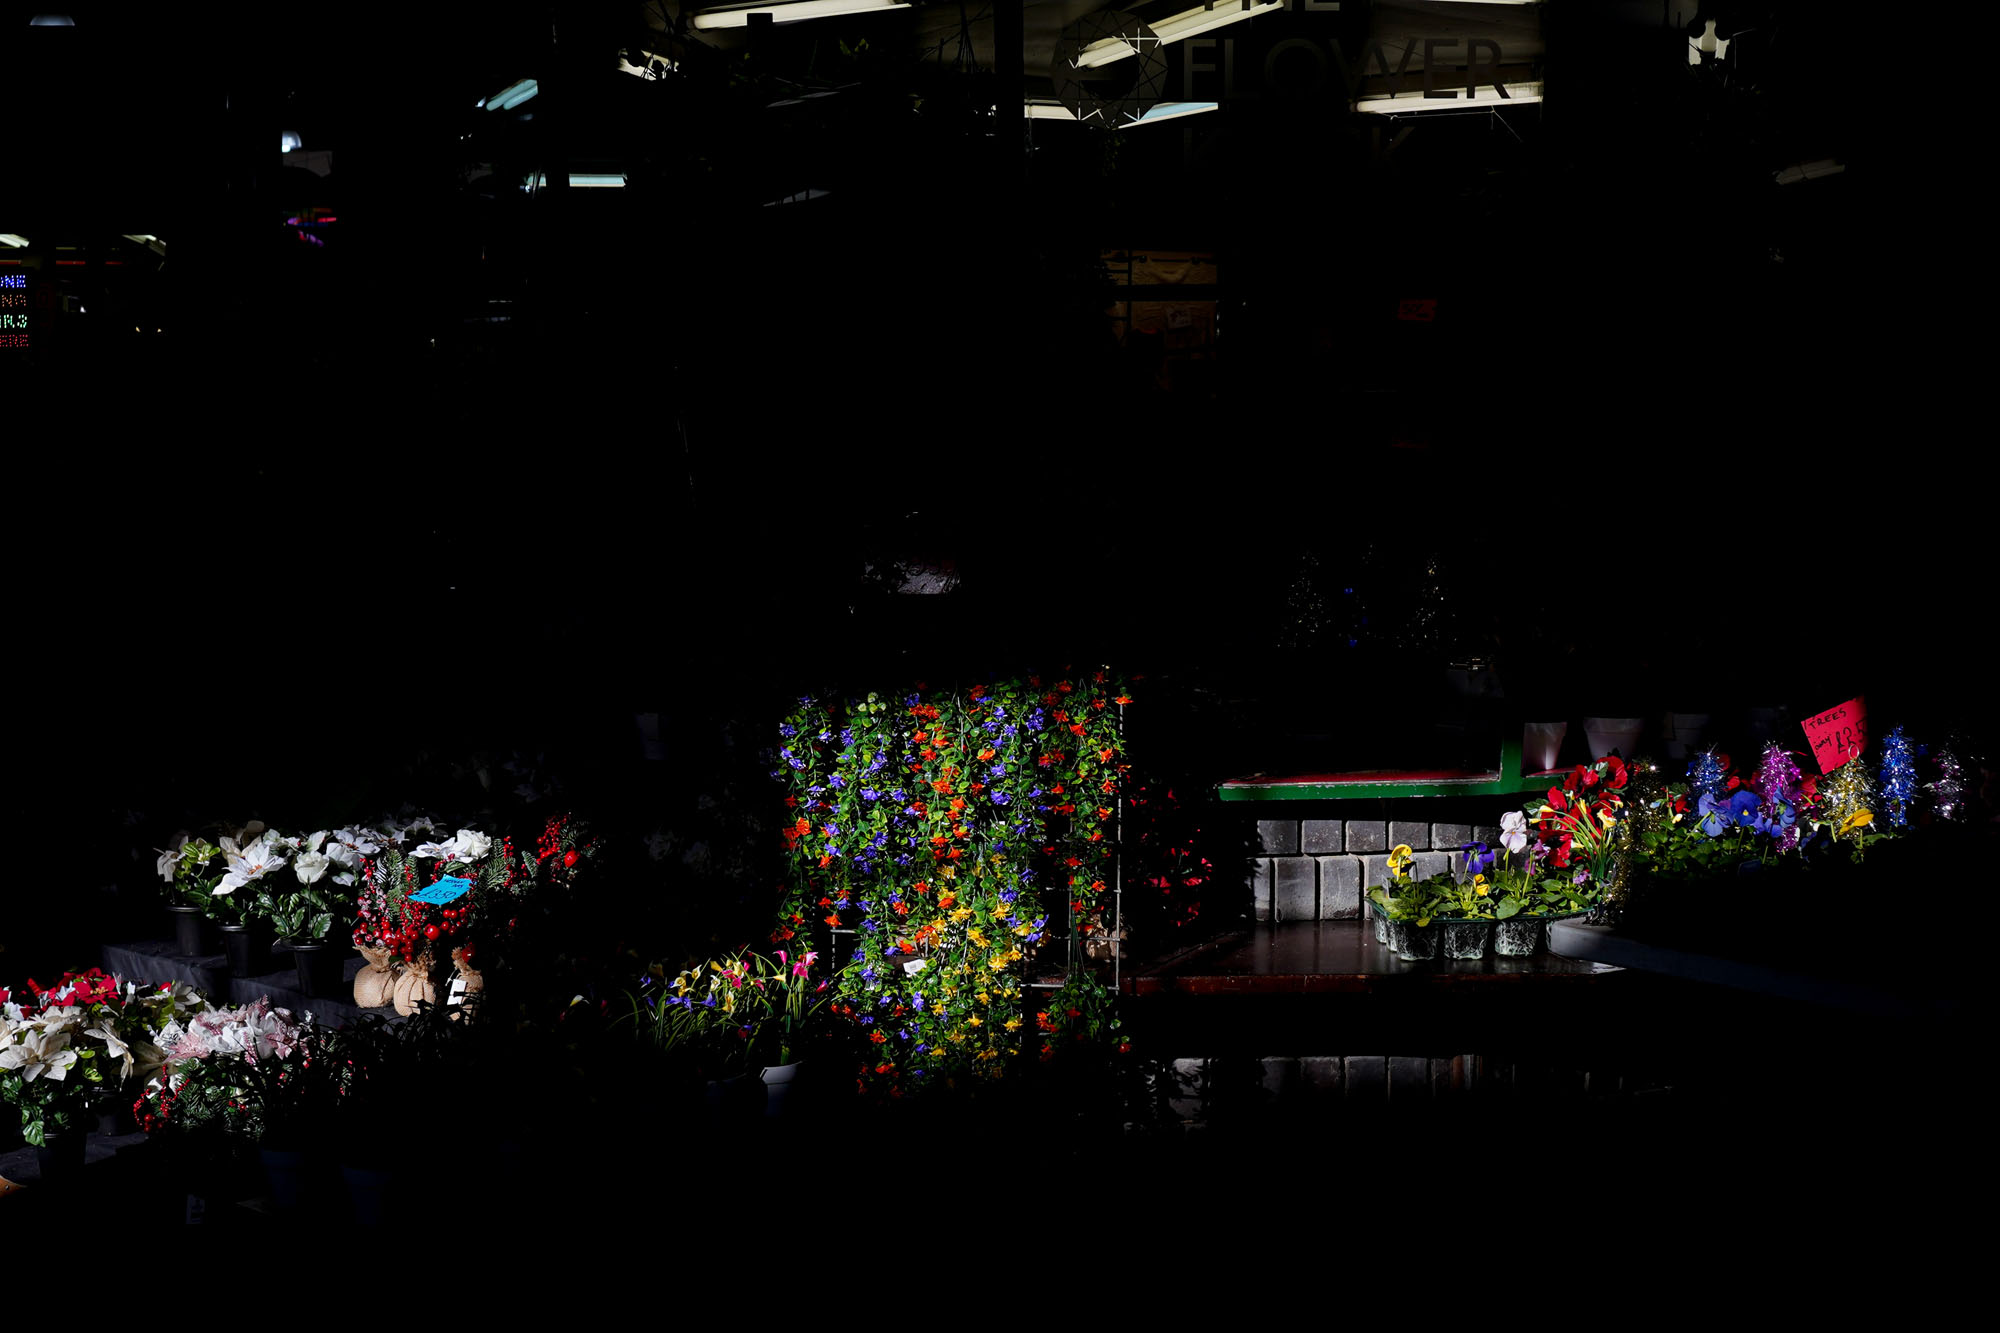 Flower market stall spot-lit against a dark background.